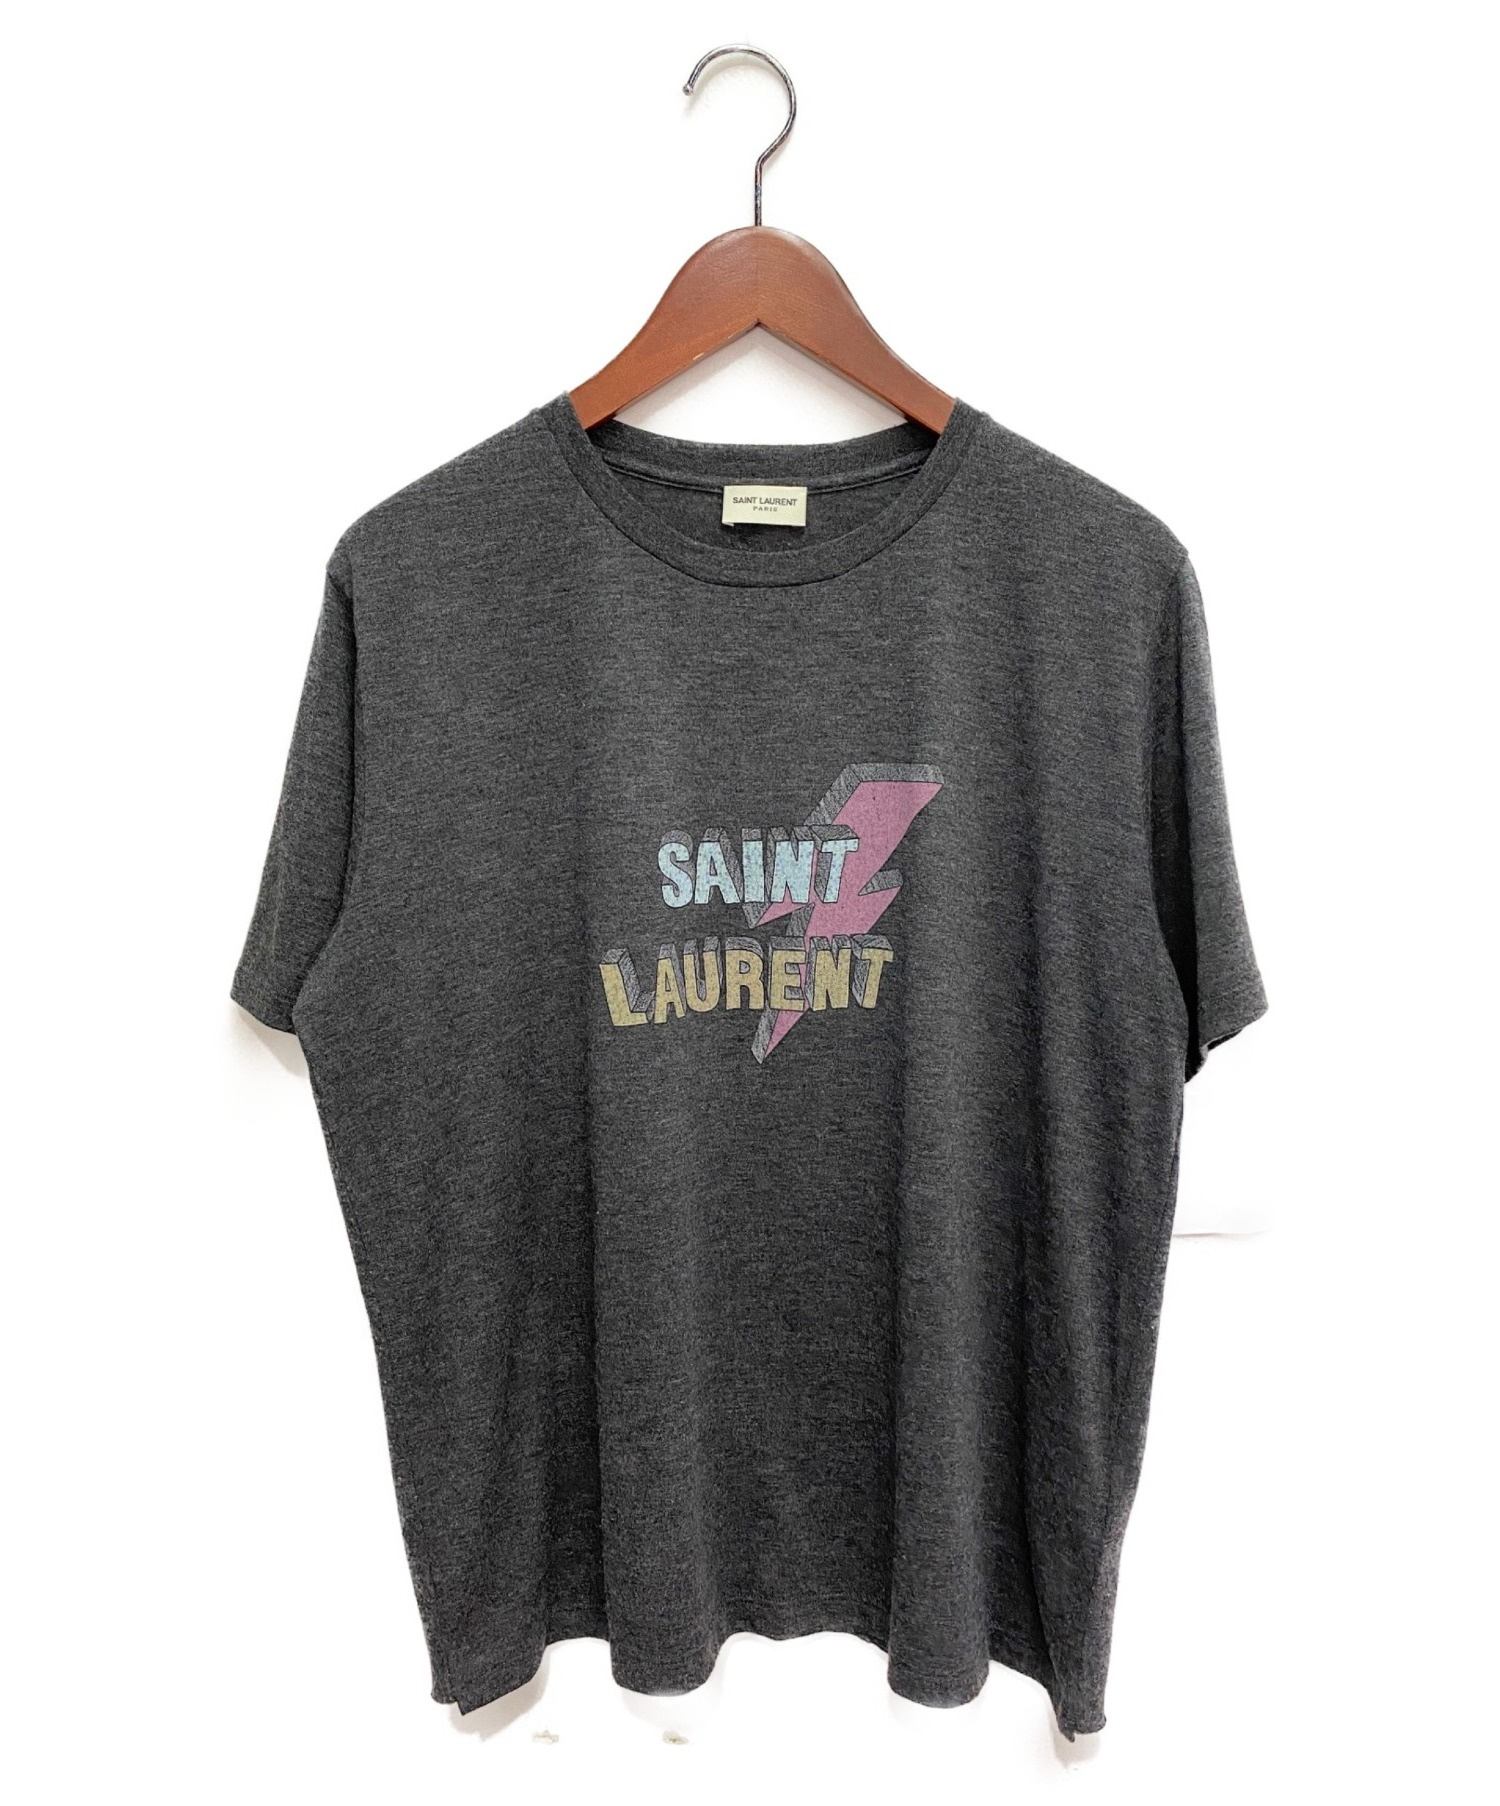 Saint Laurent Paris (サンローランパリ) ライトニングボルトTシャツ グレー サイズ:M｜ブランド古着の通販サイト